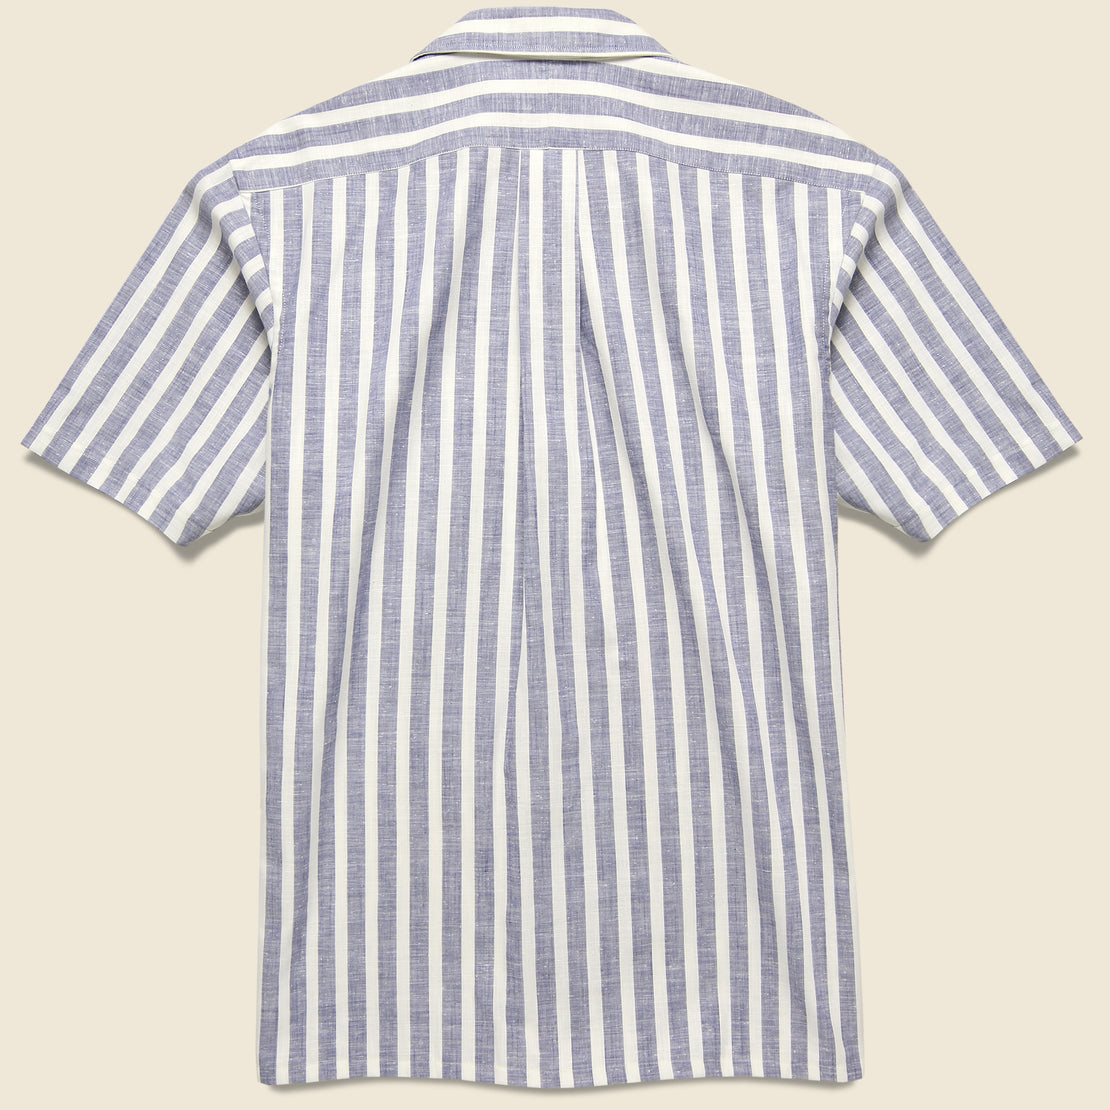 Stripe Chambray Camp Shirt - Blue/White - Hamilton Shirt Co. - STAG Provisions - Tops - S/S Woven - Stripe